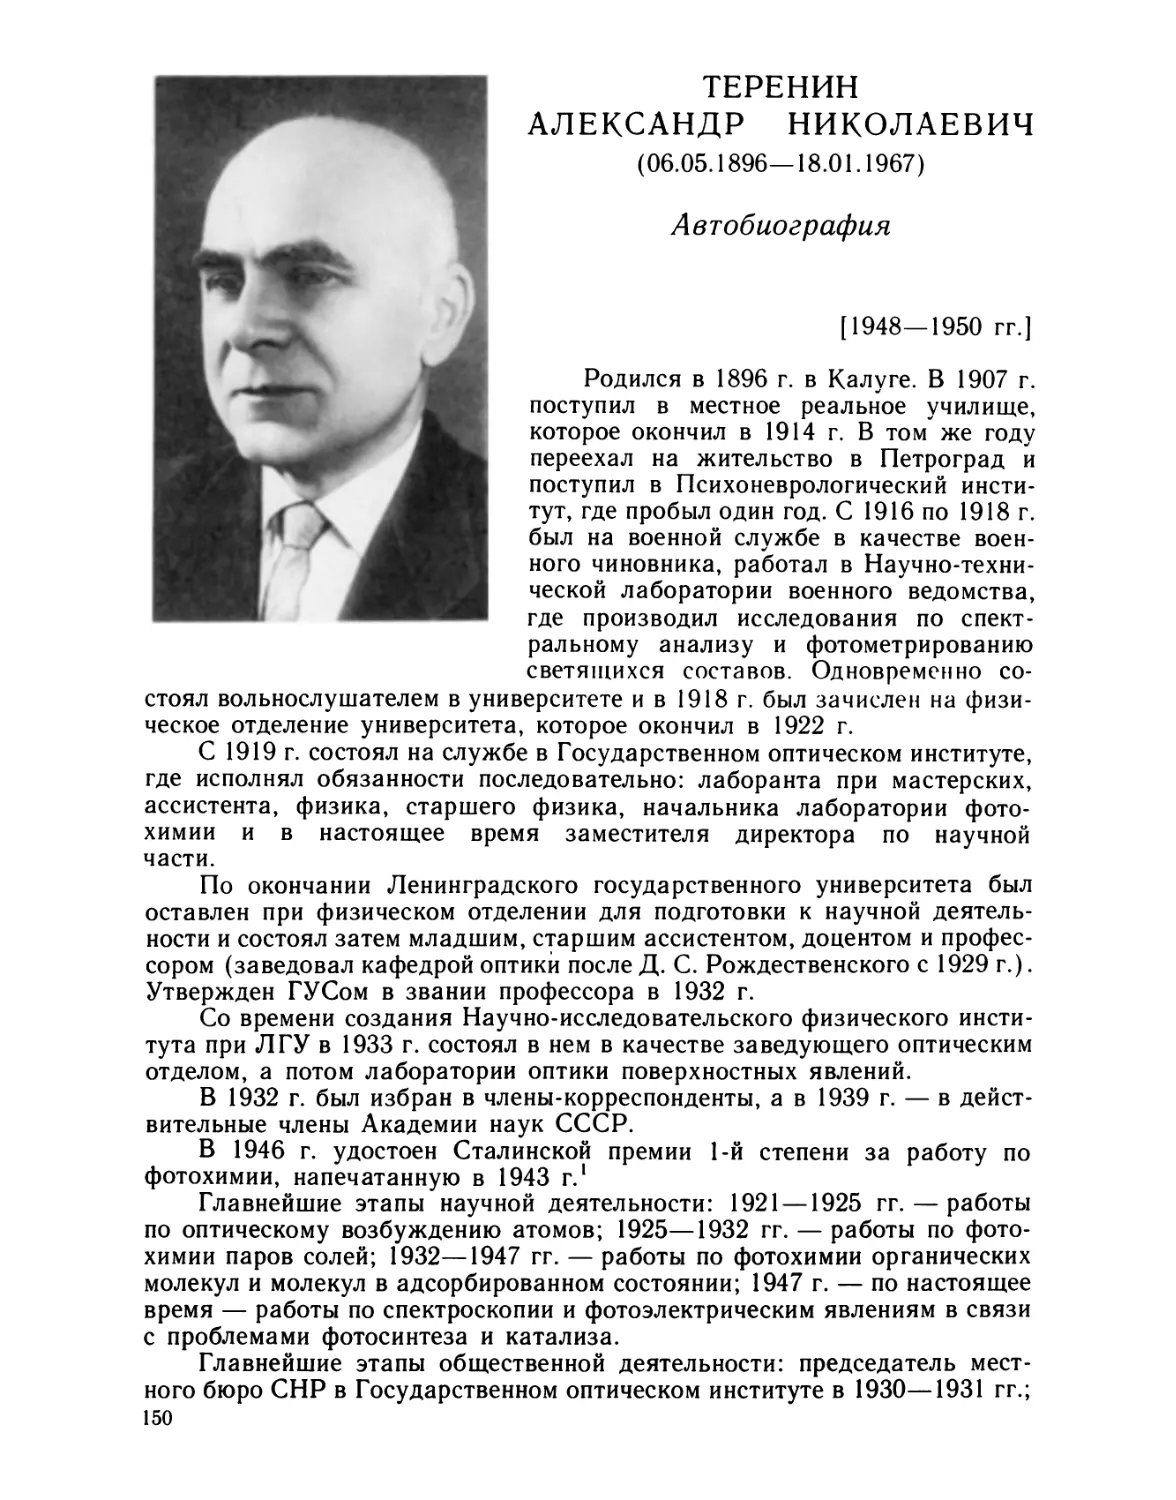 Теренин Александр Николаевич